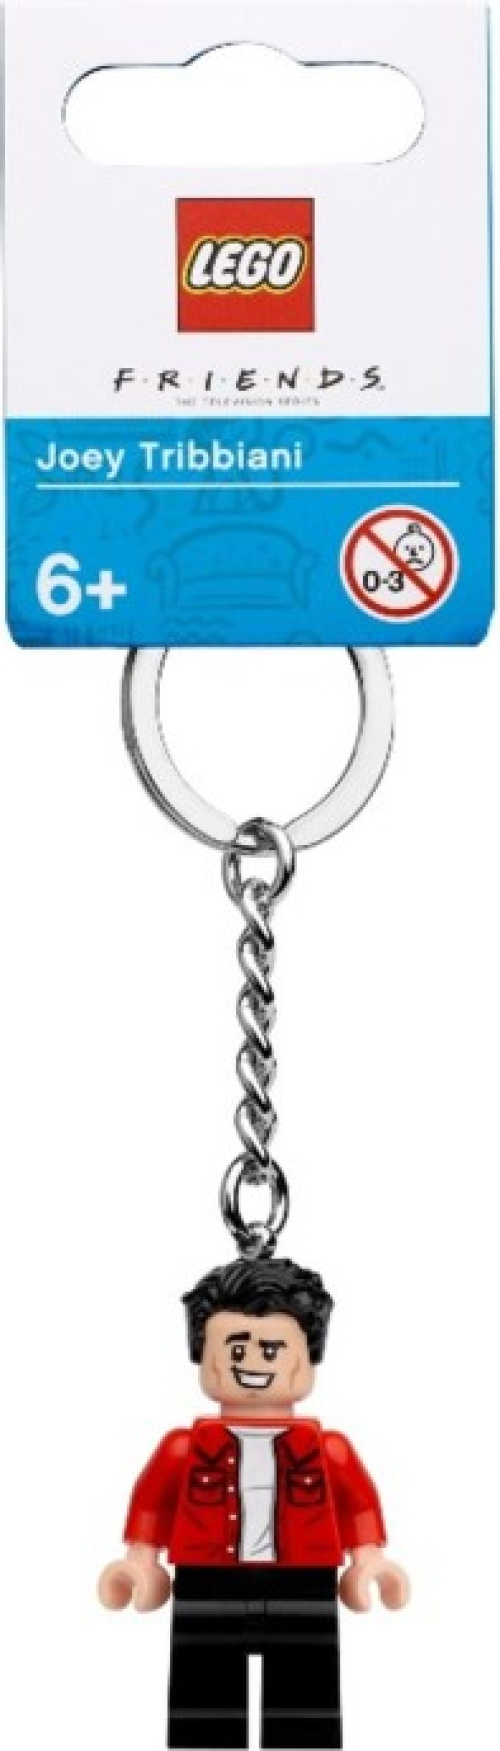 854119-1 Joey Tribbiani Key Chain